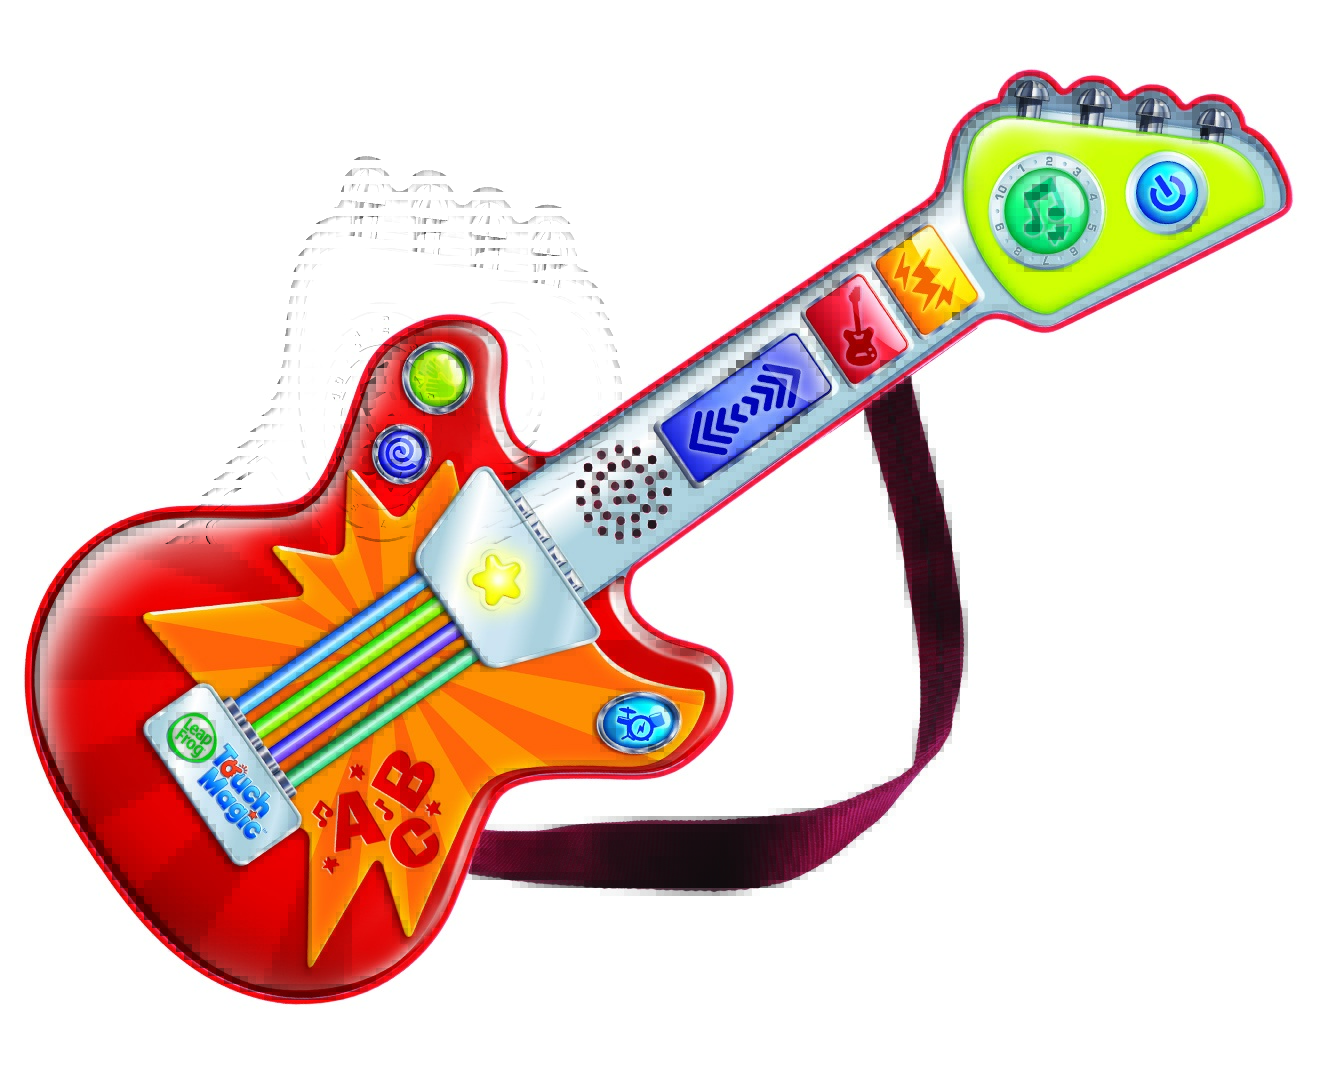 guitar clipart toy guitar